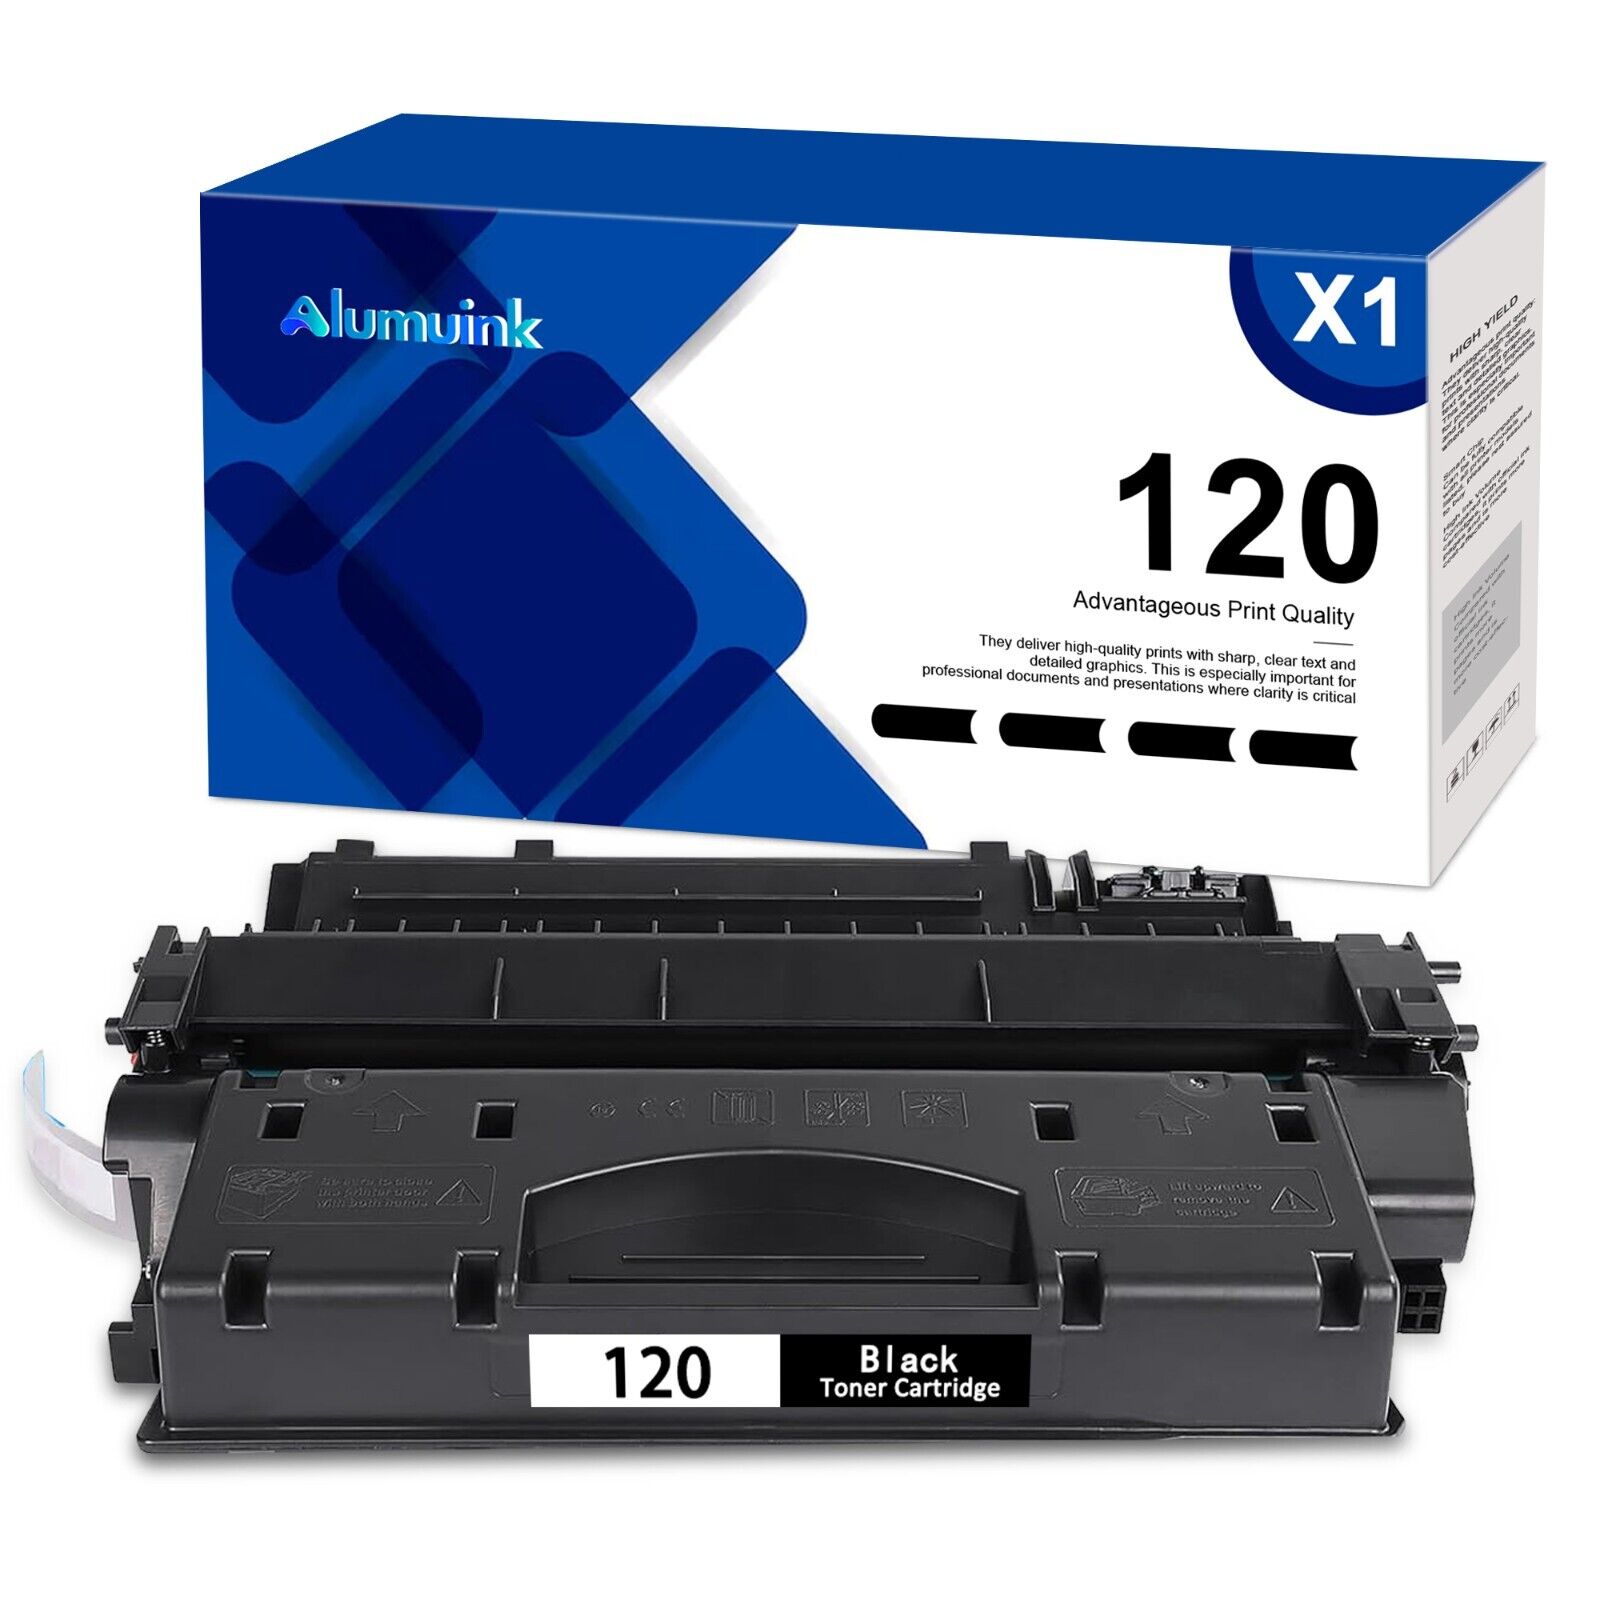 1Pack 120 Black Toner Cartridge Replacement for Canon ImageClass D1100 Printers